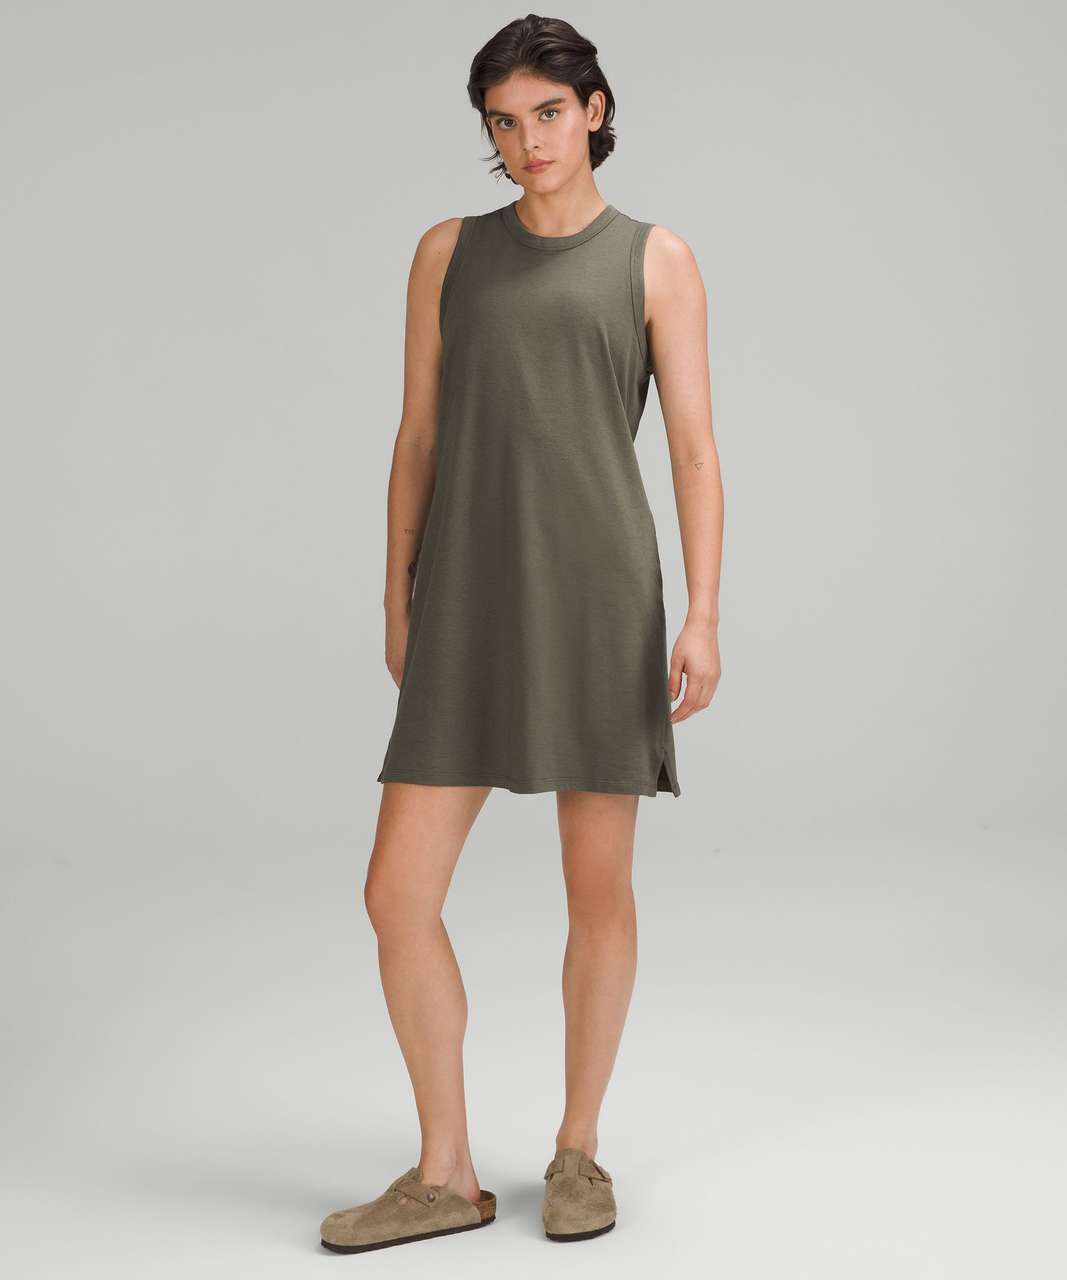 Lululemon Classic-Fit Cotton-Blend Dress - Army Green